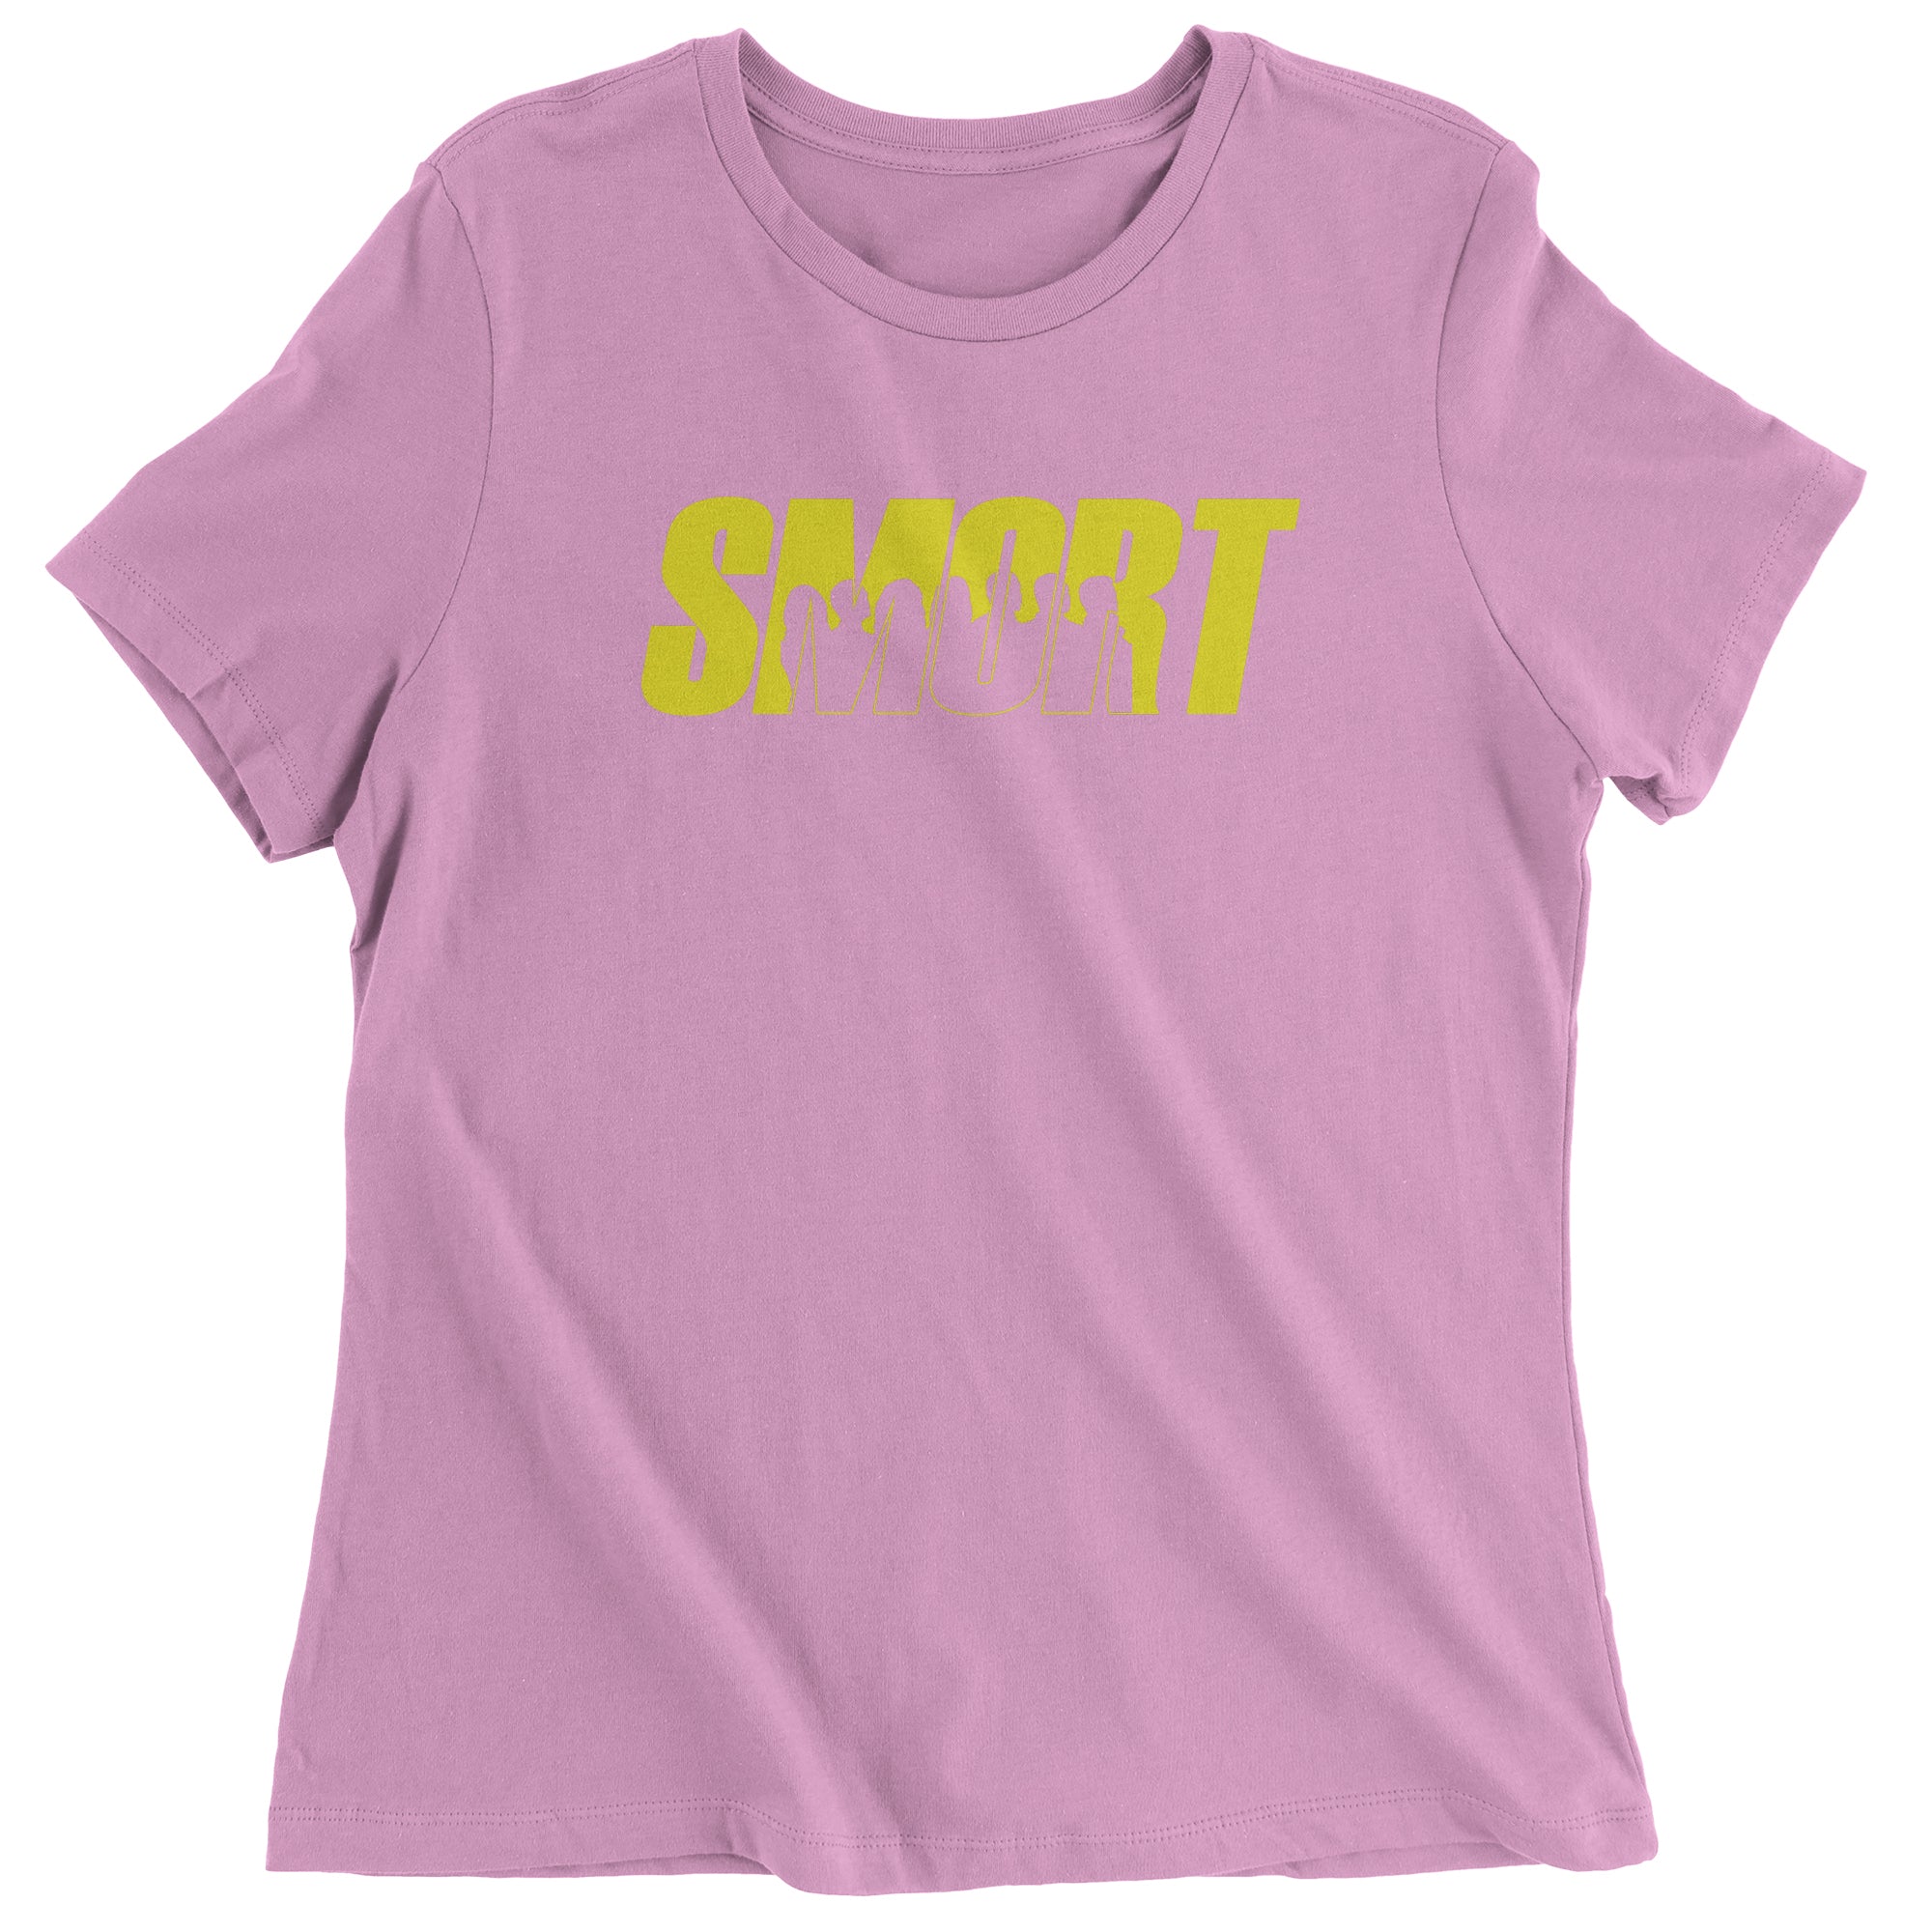 Smort Brooklyn 99 Funny Women's T-Shirt